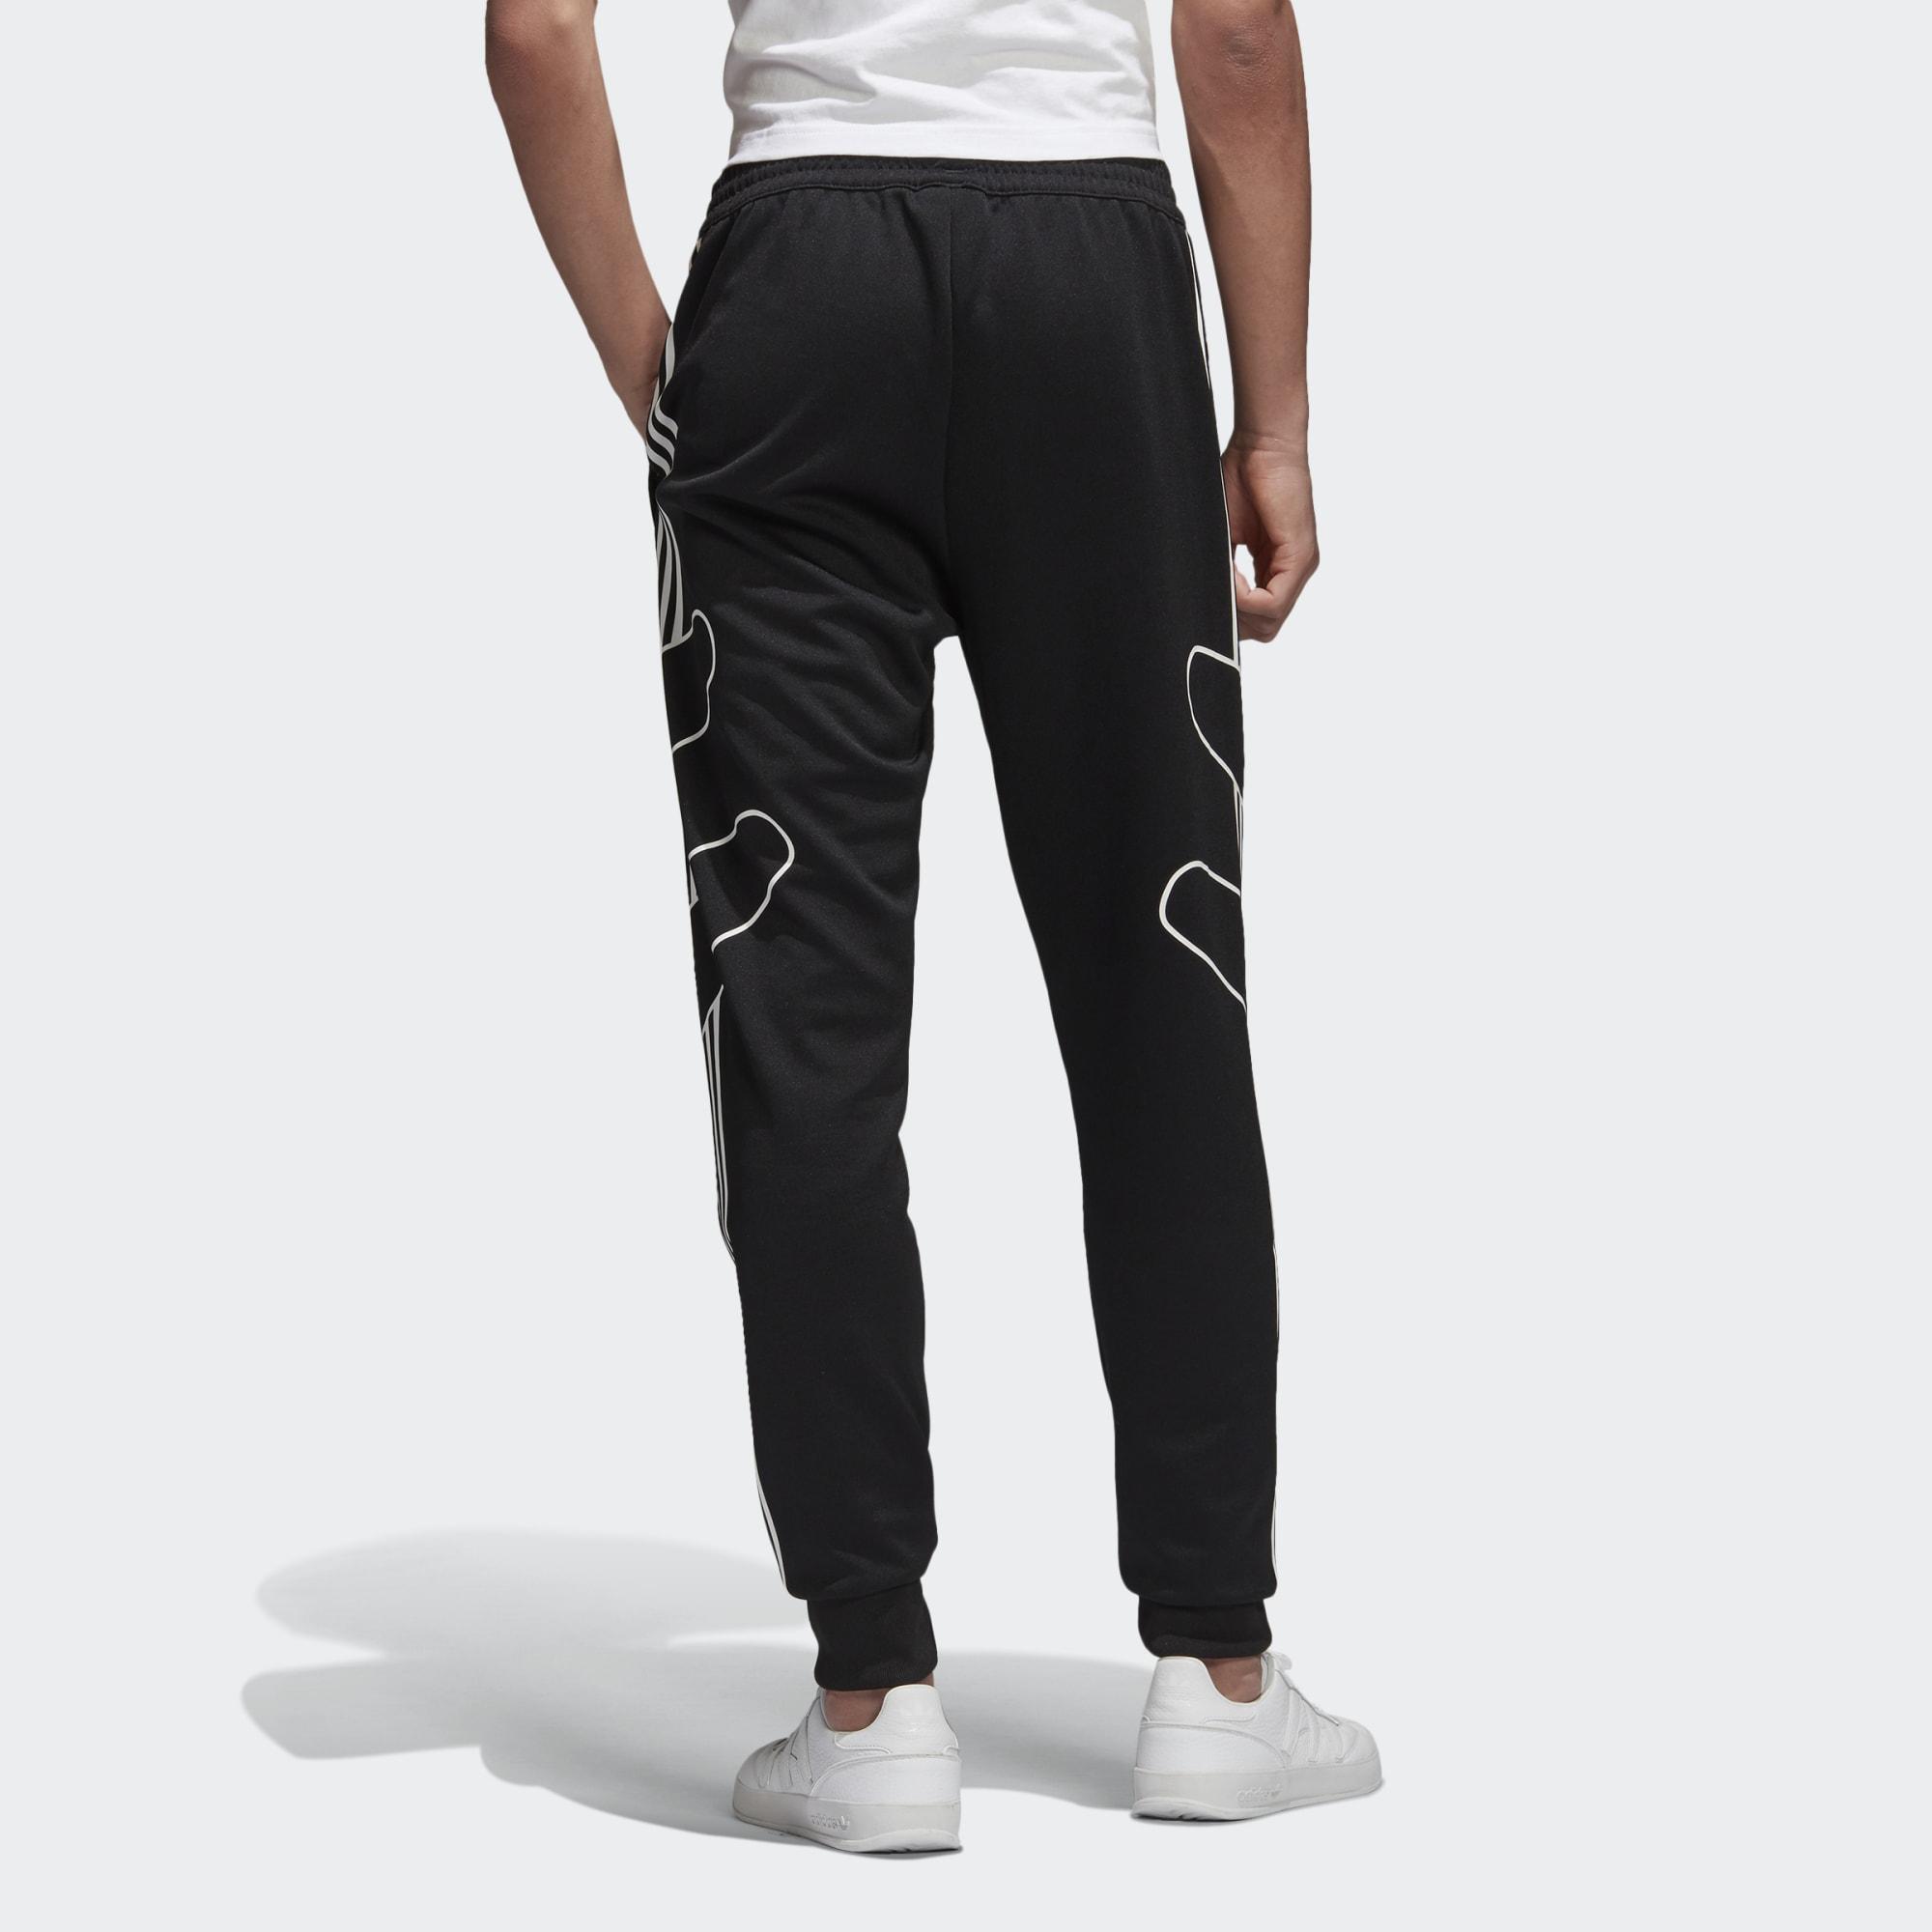 adidas Flamestrike Track Pants in Black for Men - Lyst